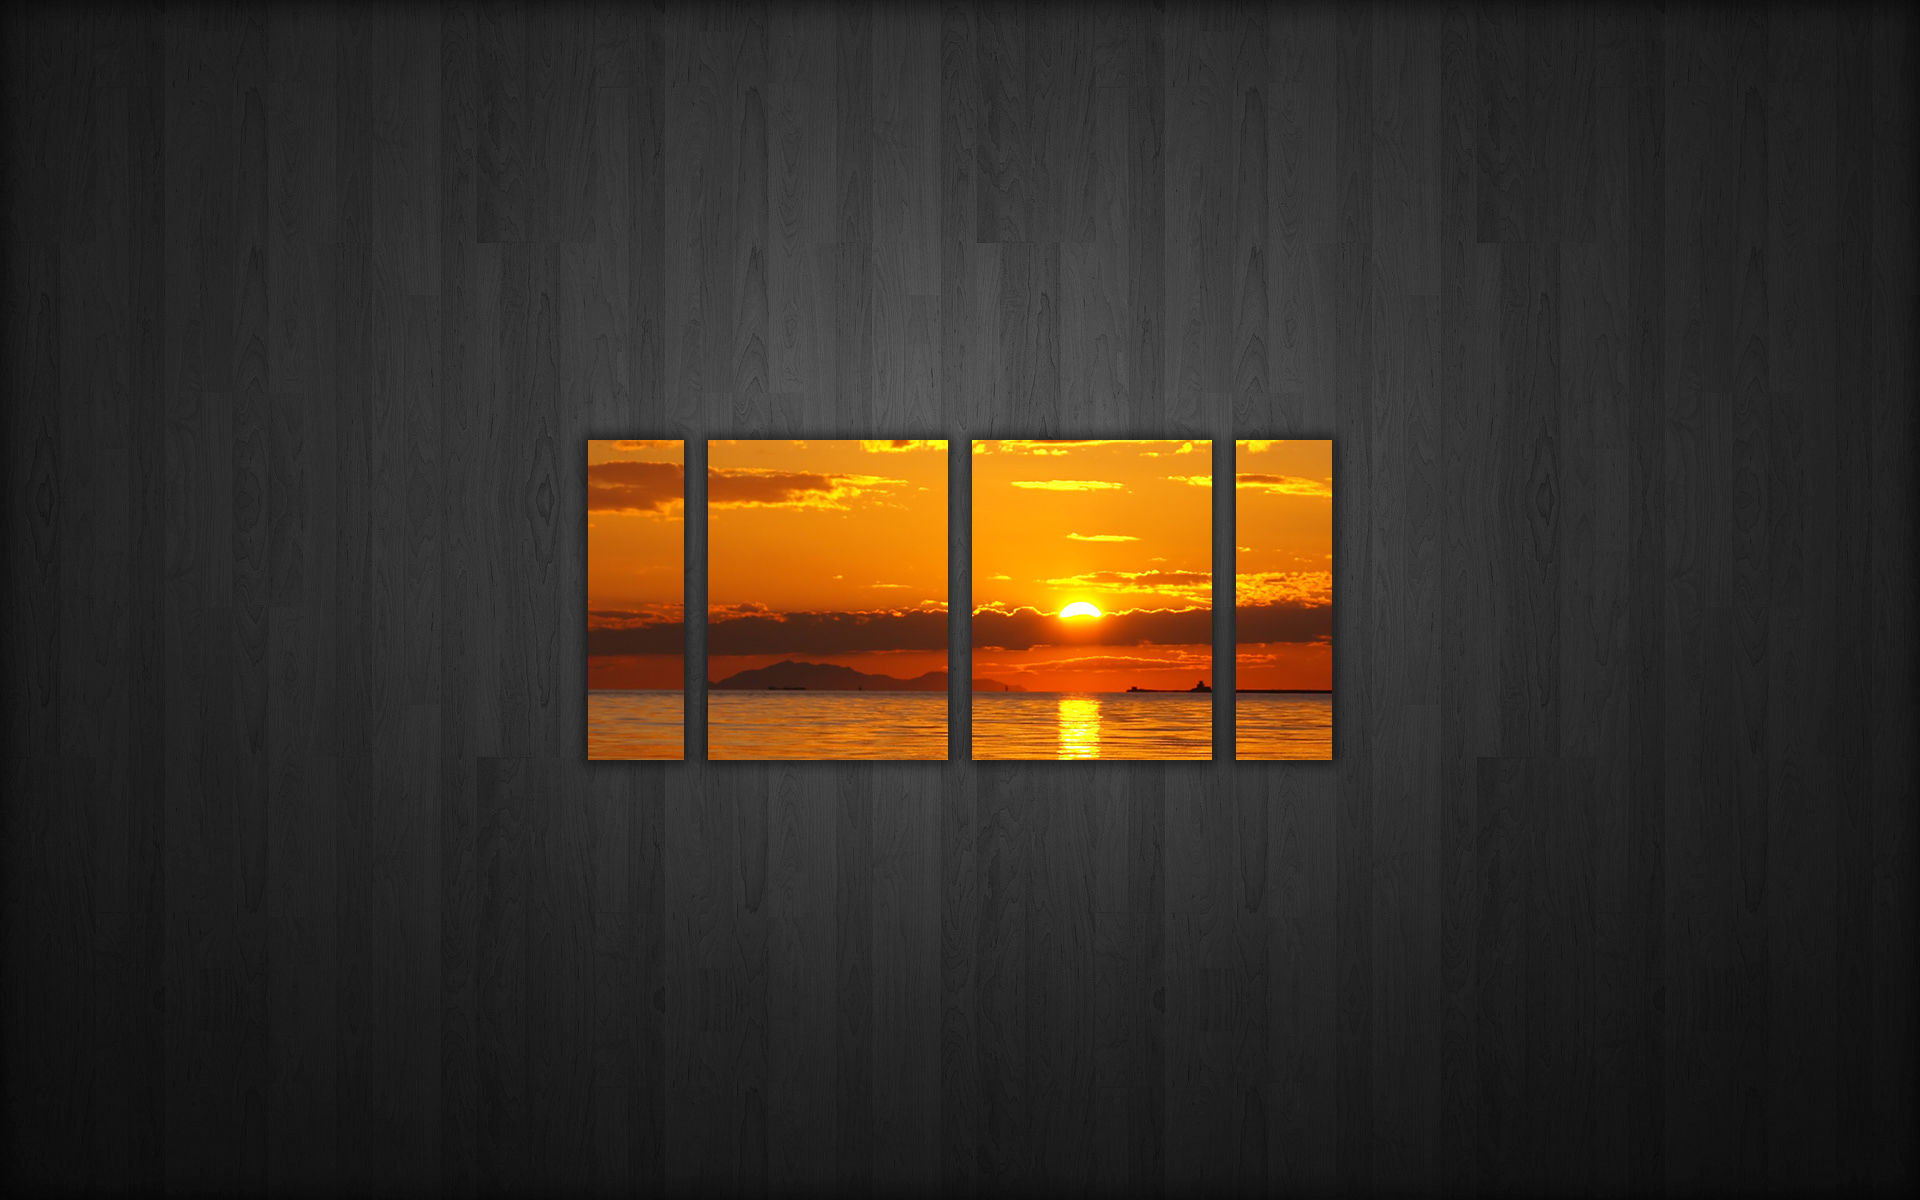 free HD images - desktop wallpaper